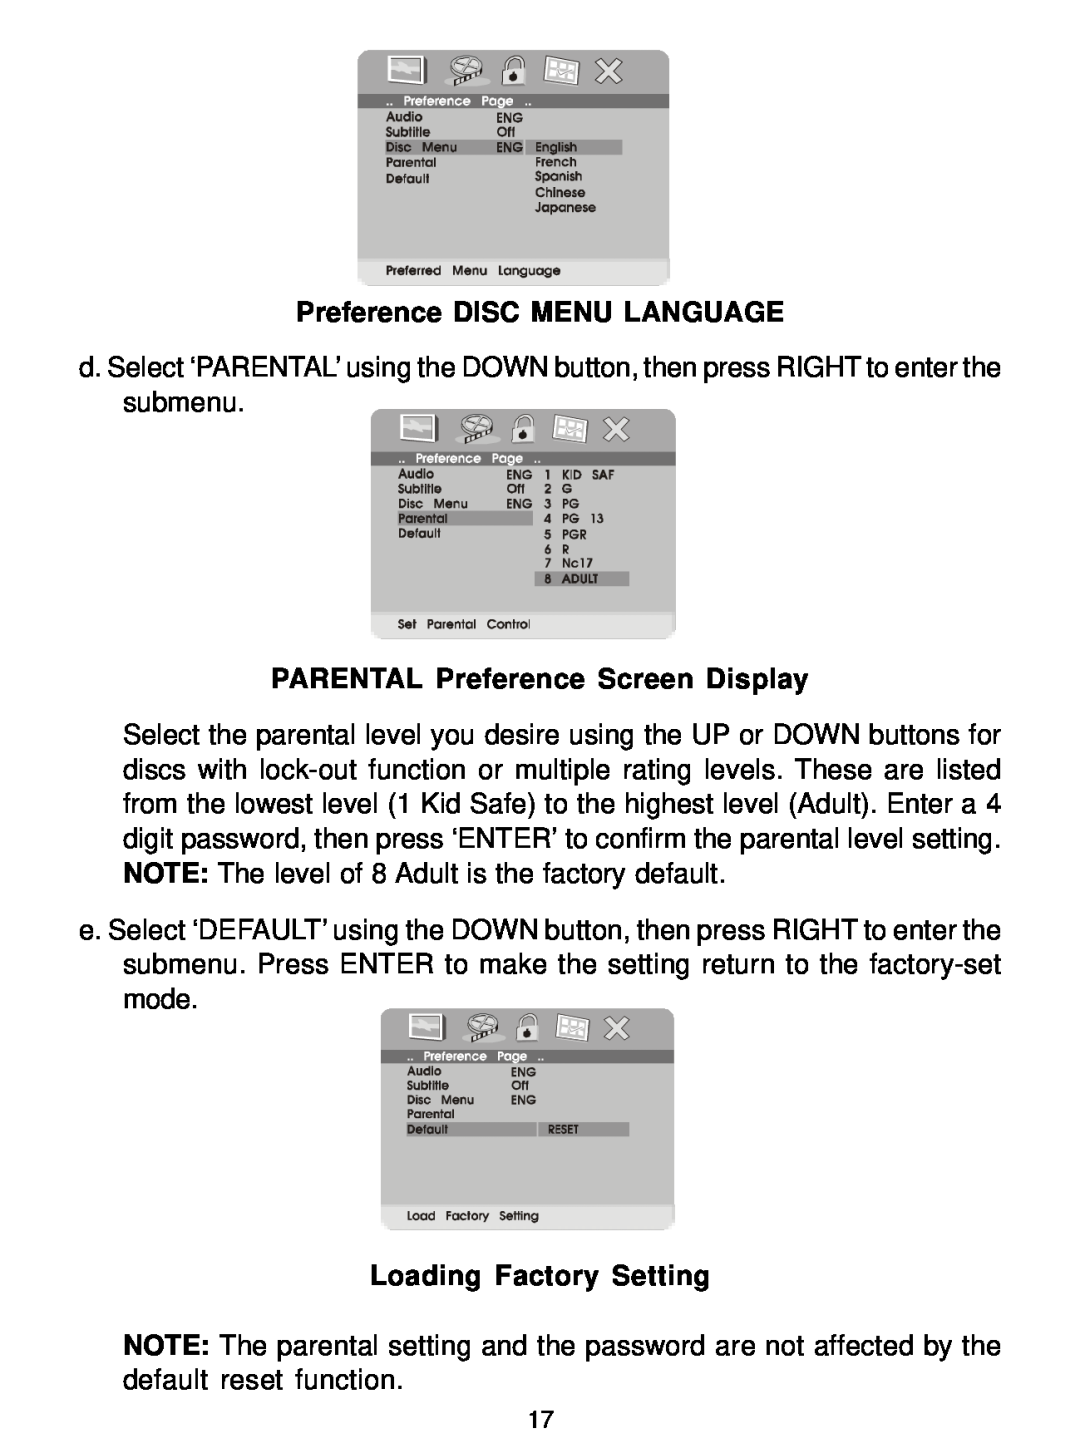 Audiovox D1726 manual Preference DISC MENU LANGUAGE, PARENTAL Preference Screen Display, Loading Factory Setting 